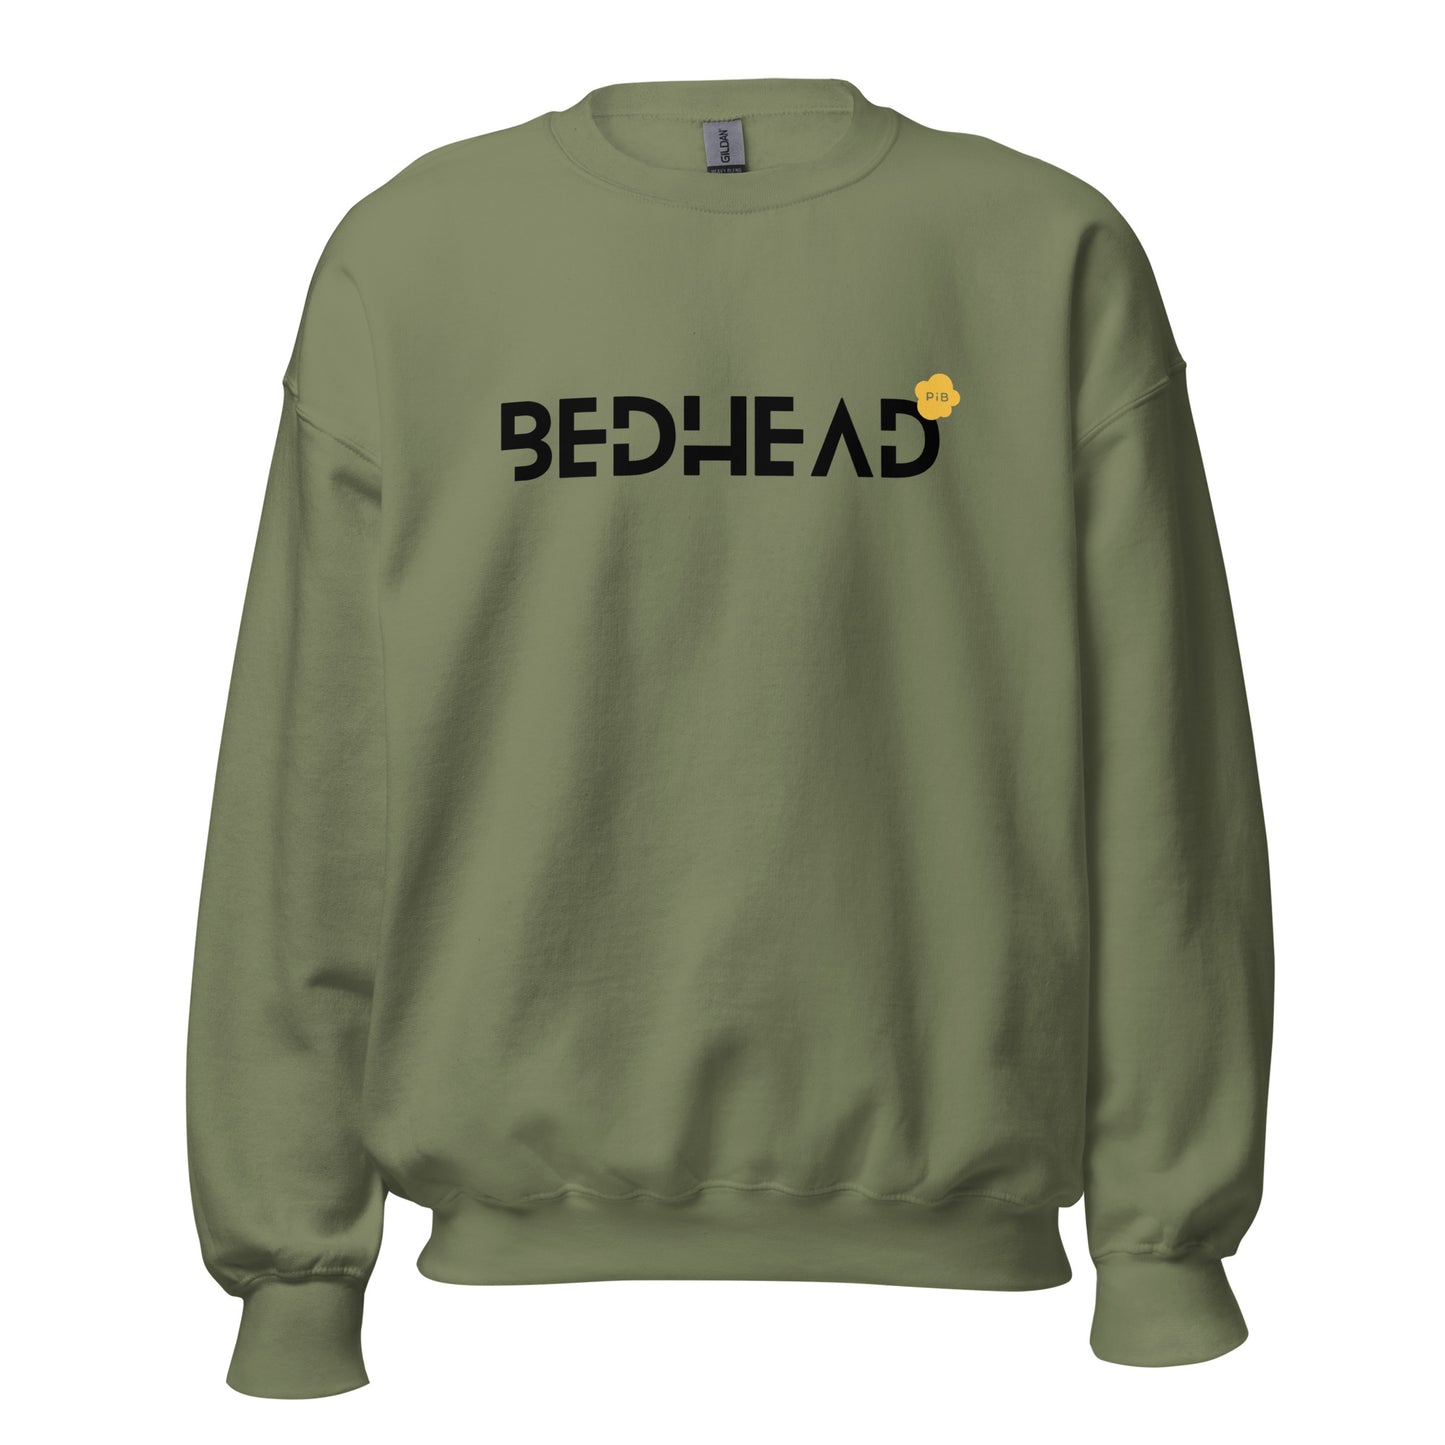 BEDHEAD Unisex Sweatshirt